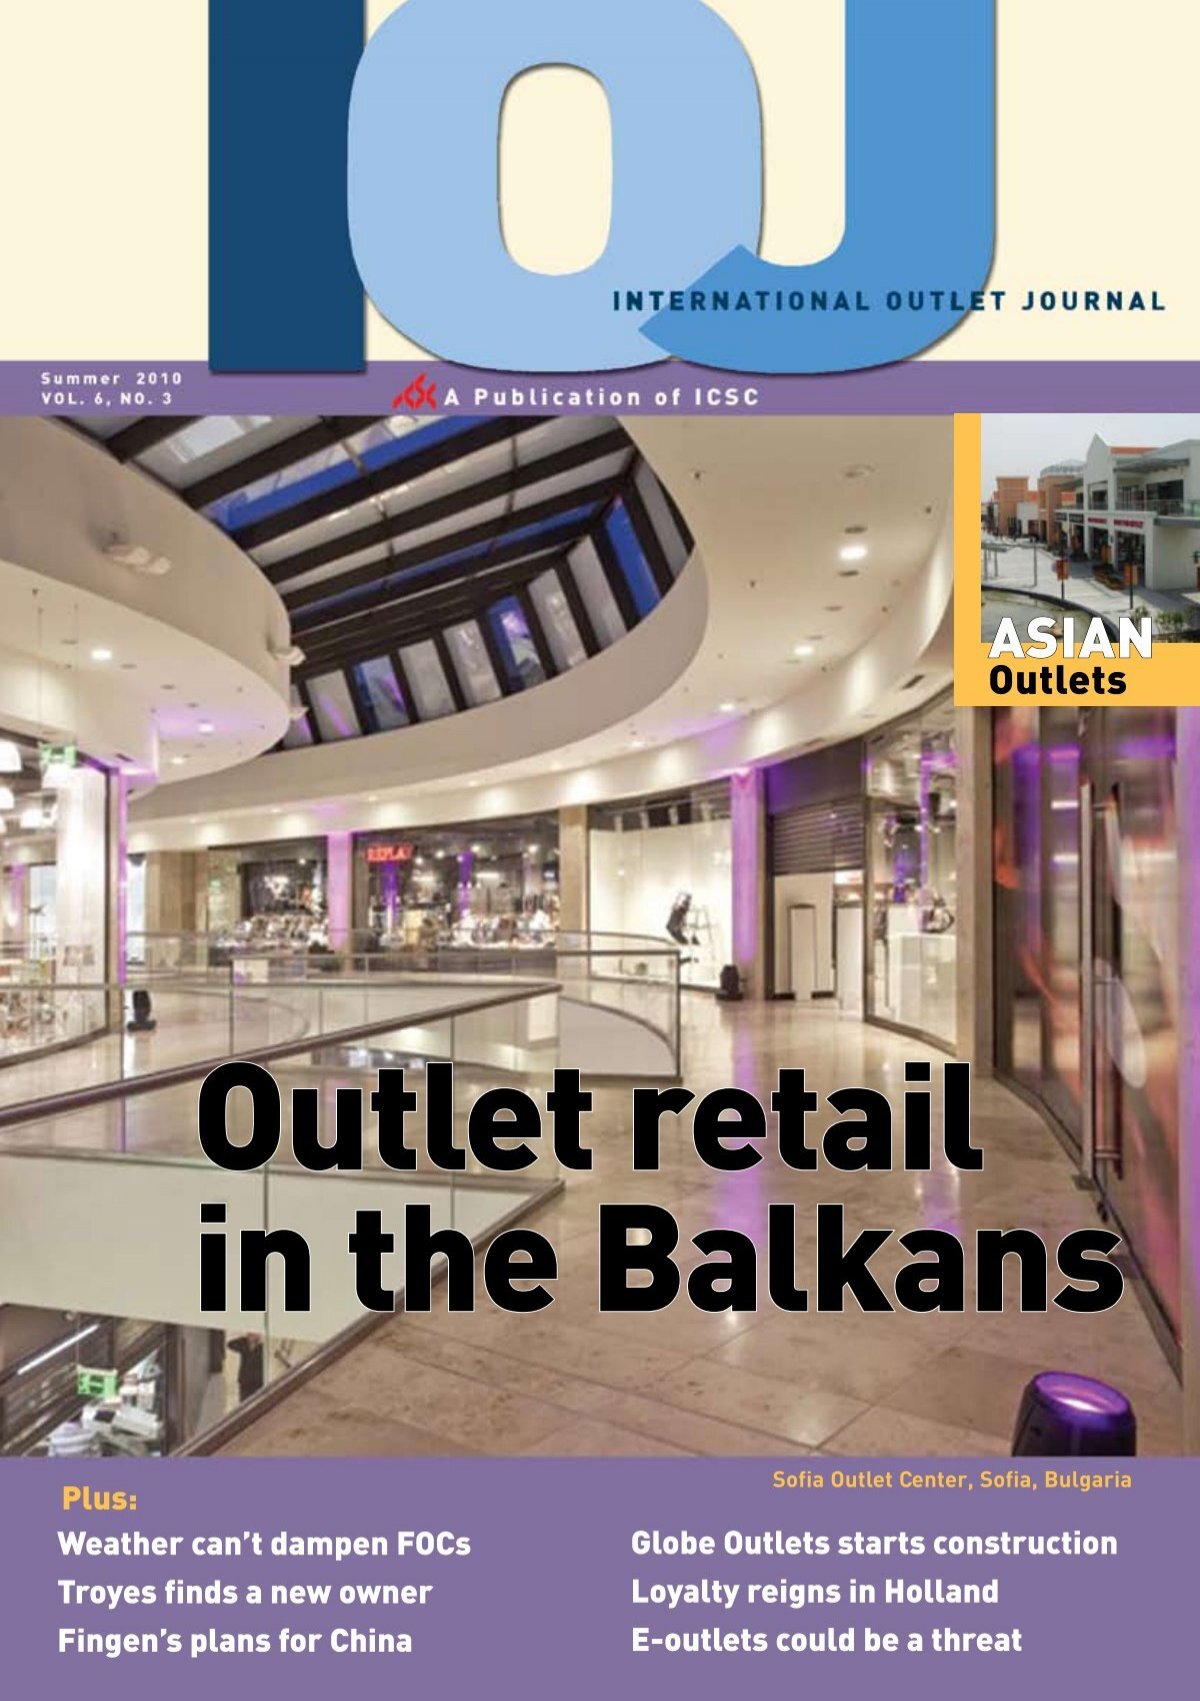 ICSC European Outlet Conference - Value Retail News